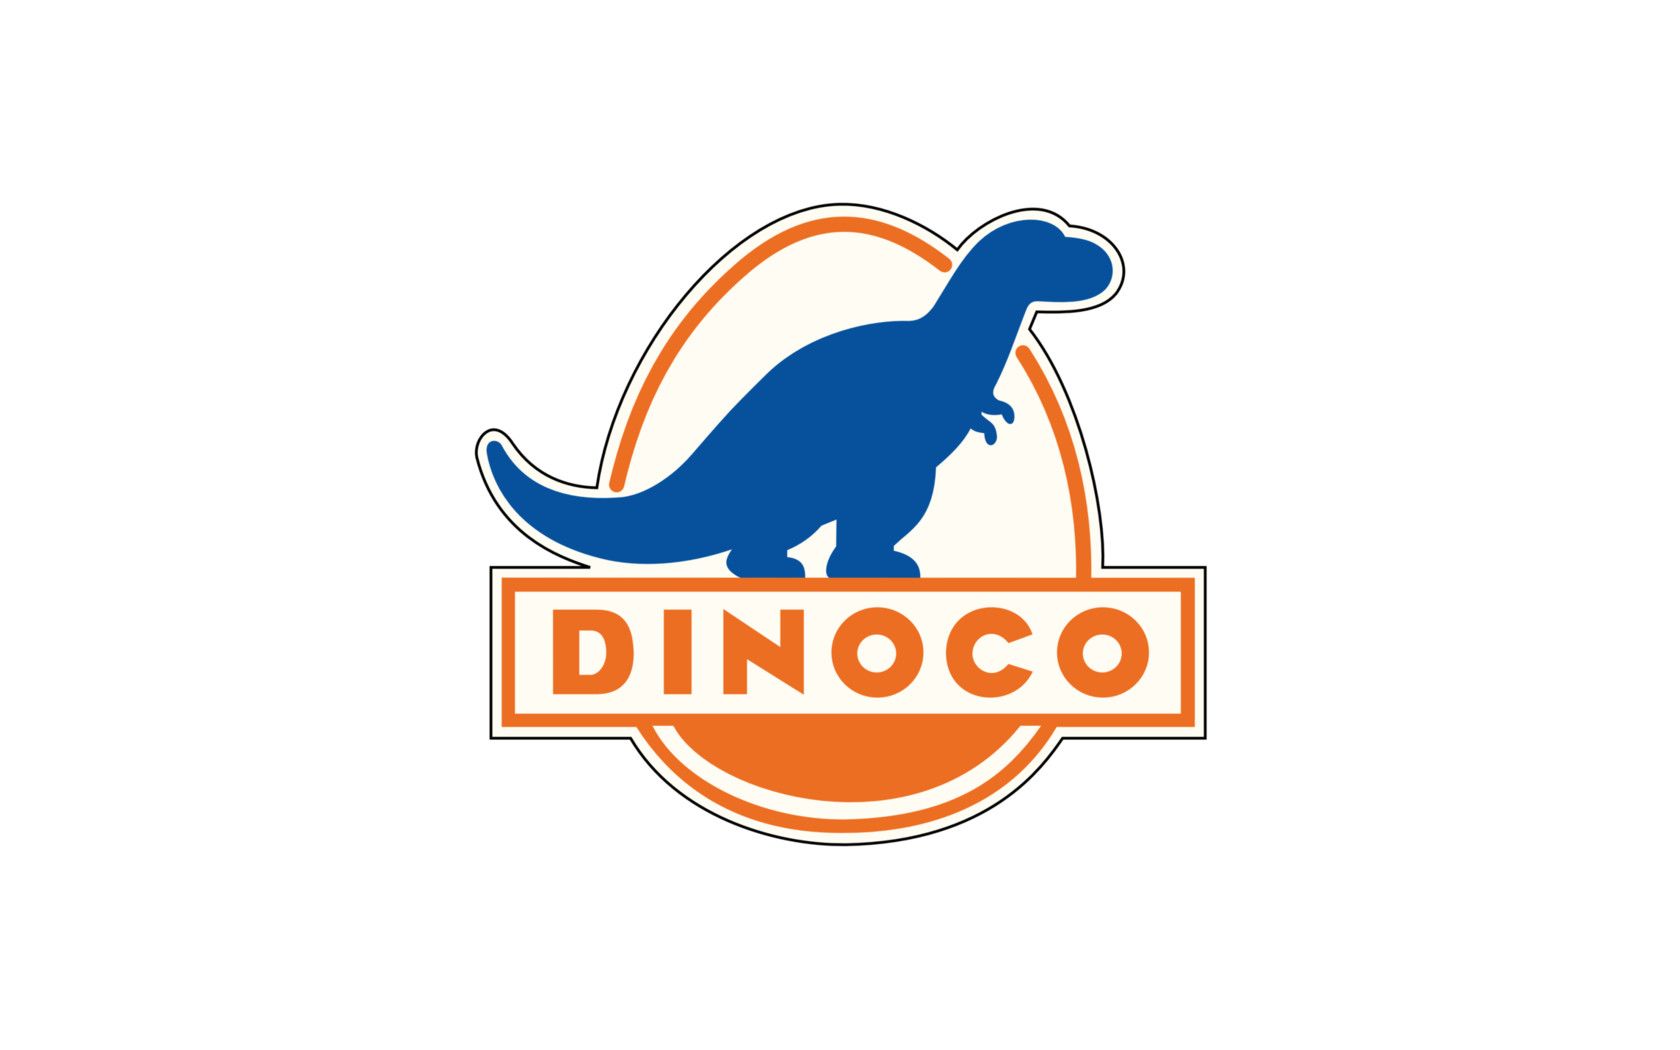 Dinoco. Disney printables, Logos, Car logos